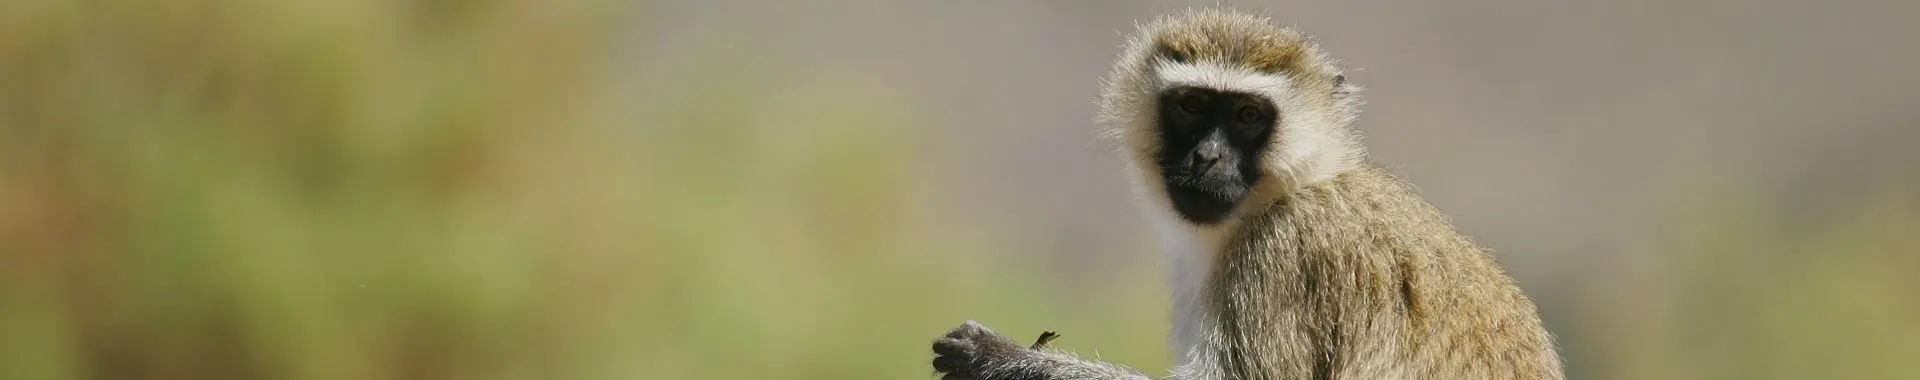 African Vervet Monkey